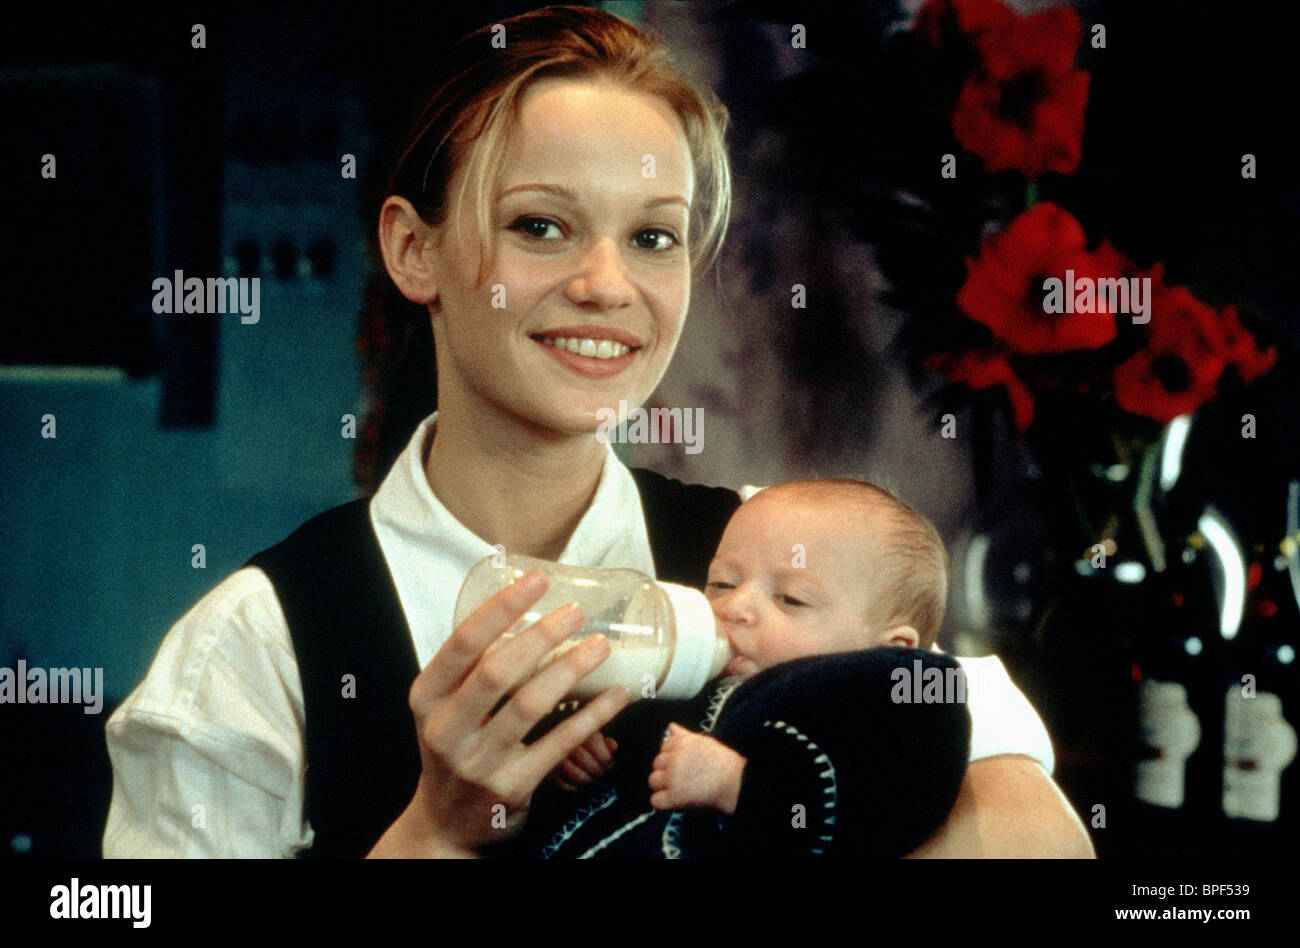 SAMANTHA MATHIS, Baby, JACK UND SARAH, 1995 Stockfotografie - Alamy